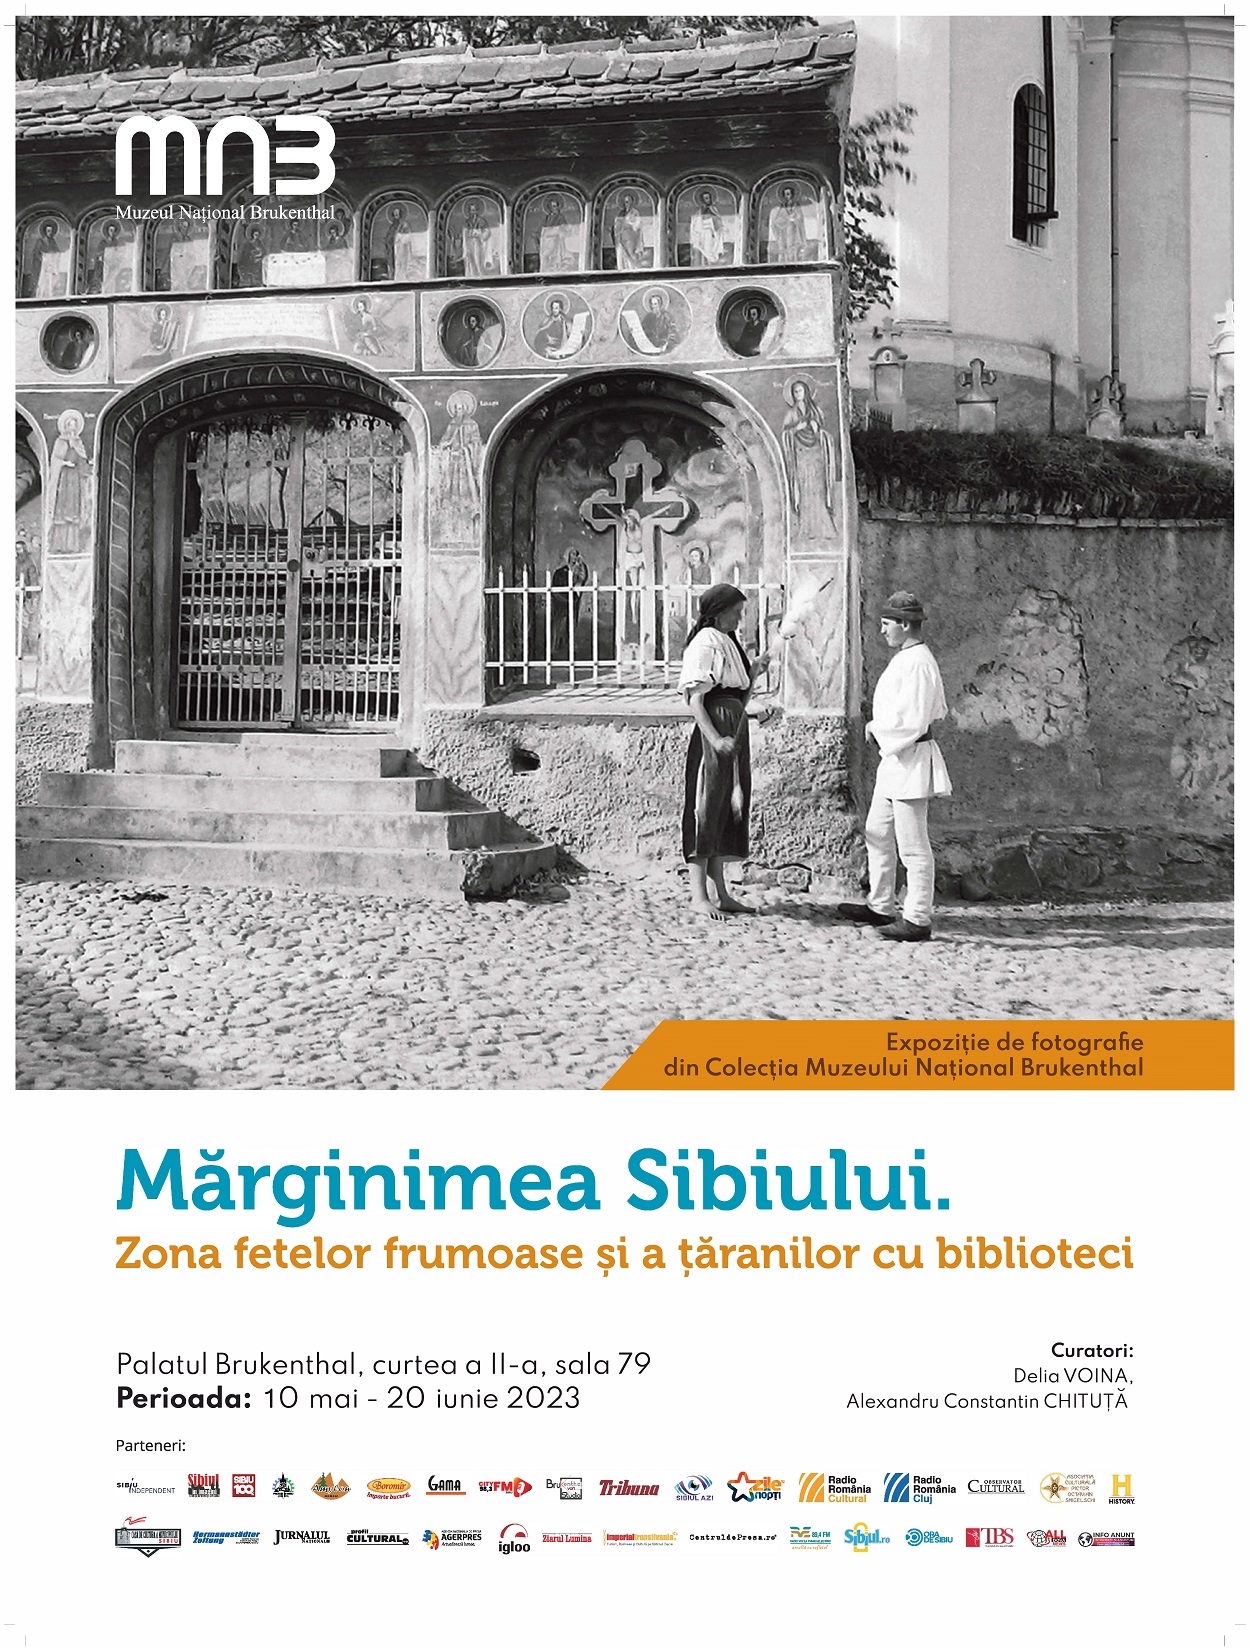 Mărginimea Sibiului. The area of beautiful girls and peasants with libraries 